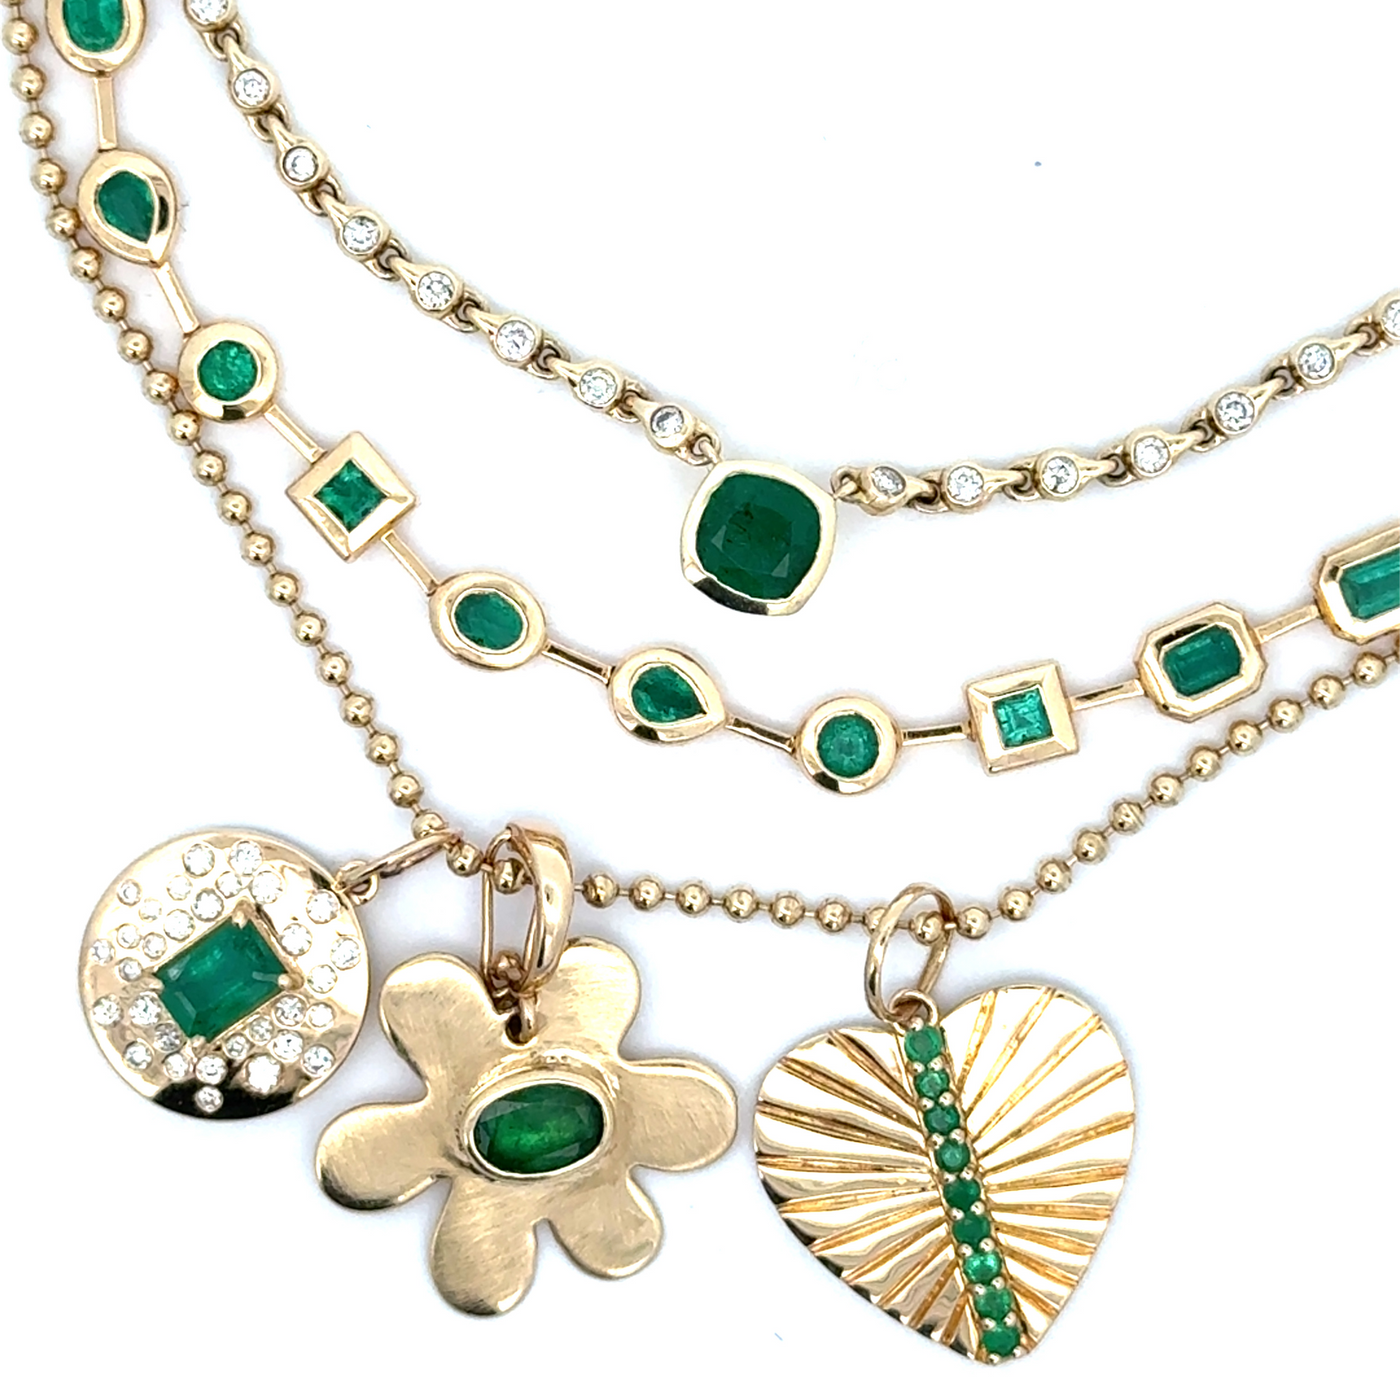 Bezel Set Emerald and Diamond Necklace